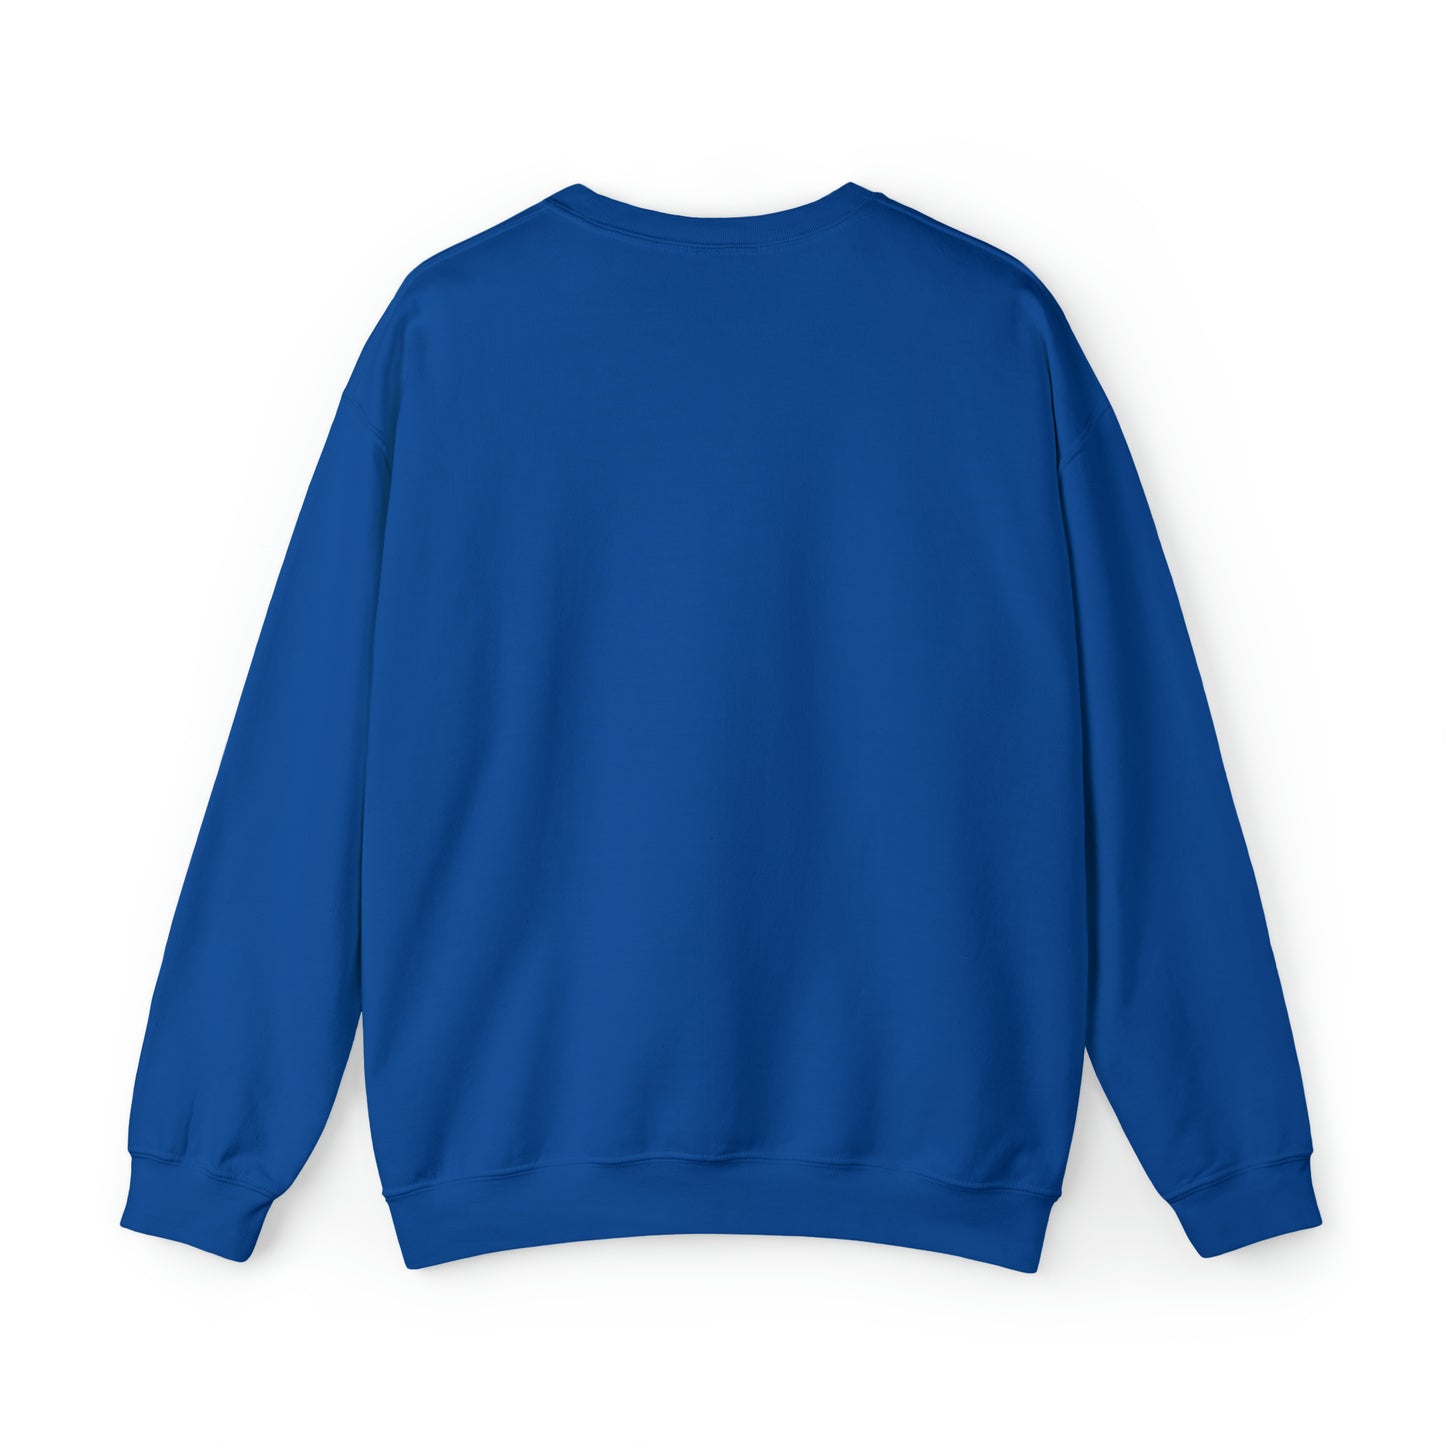 Happy New You Unisex Heavy Blend™ Crewneck Sweatshirt